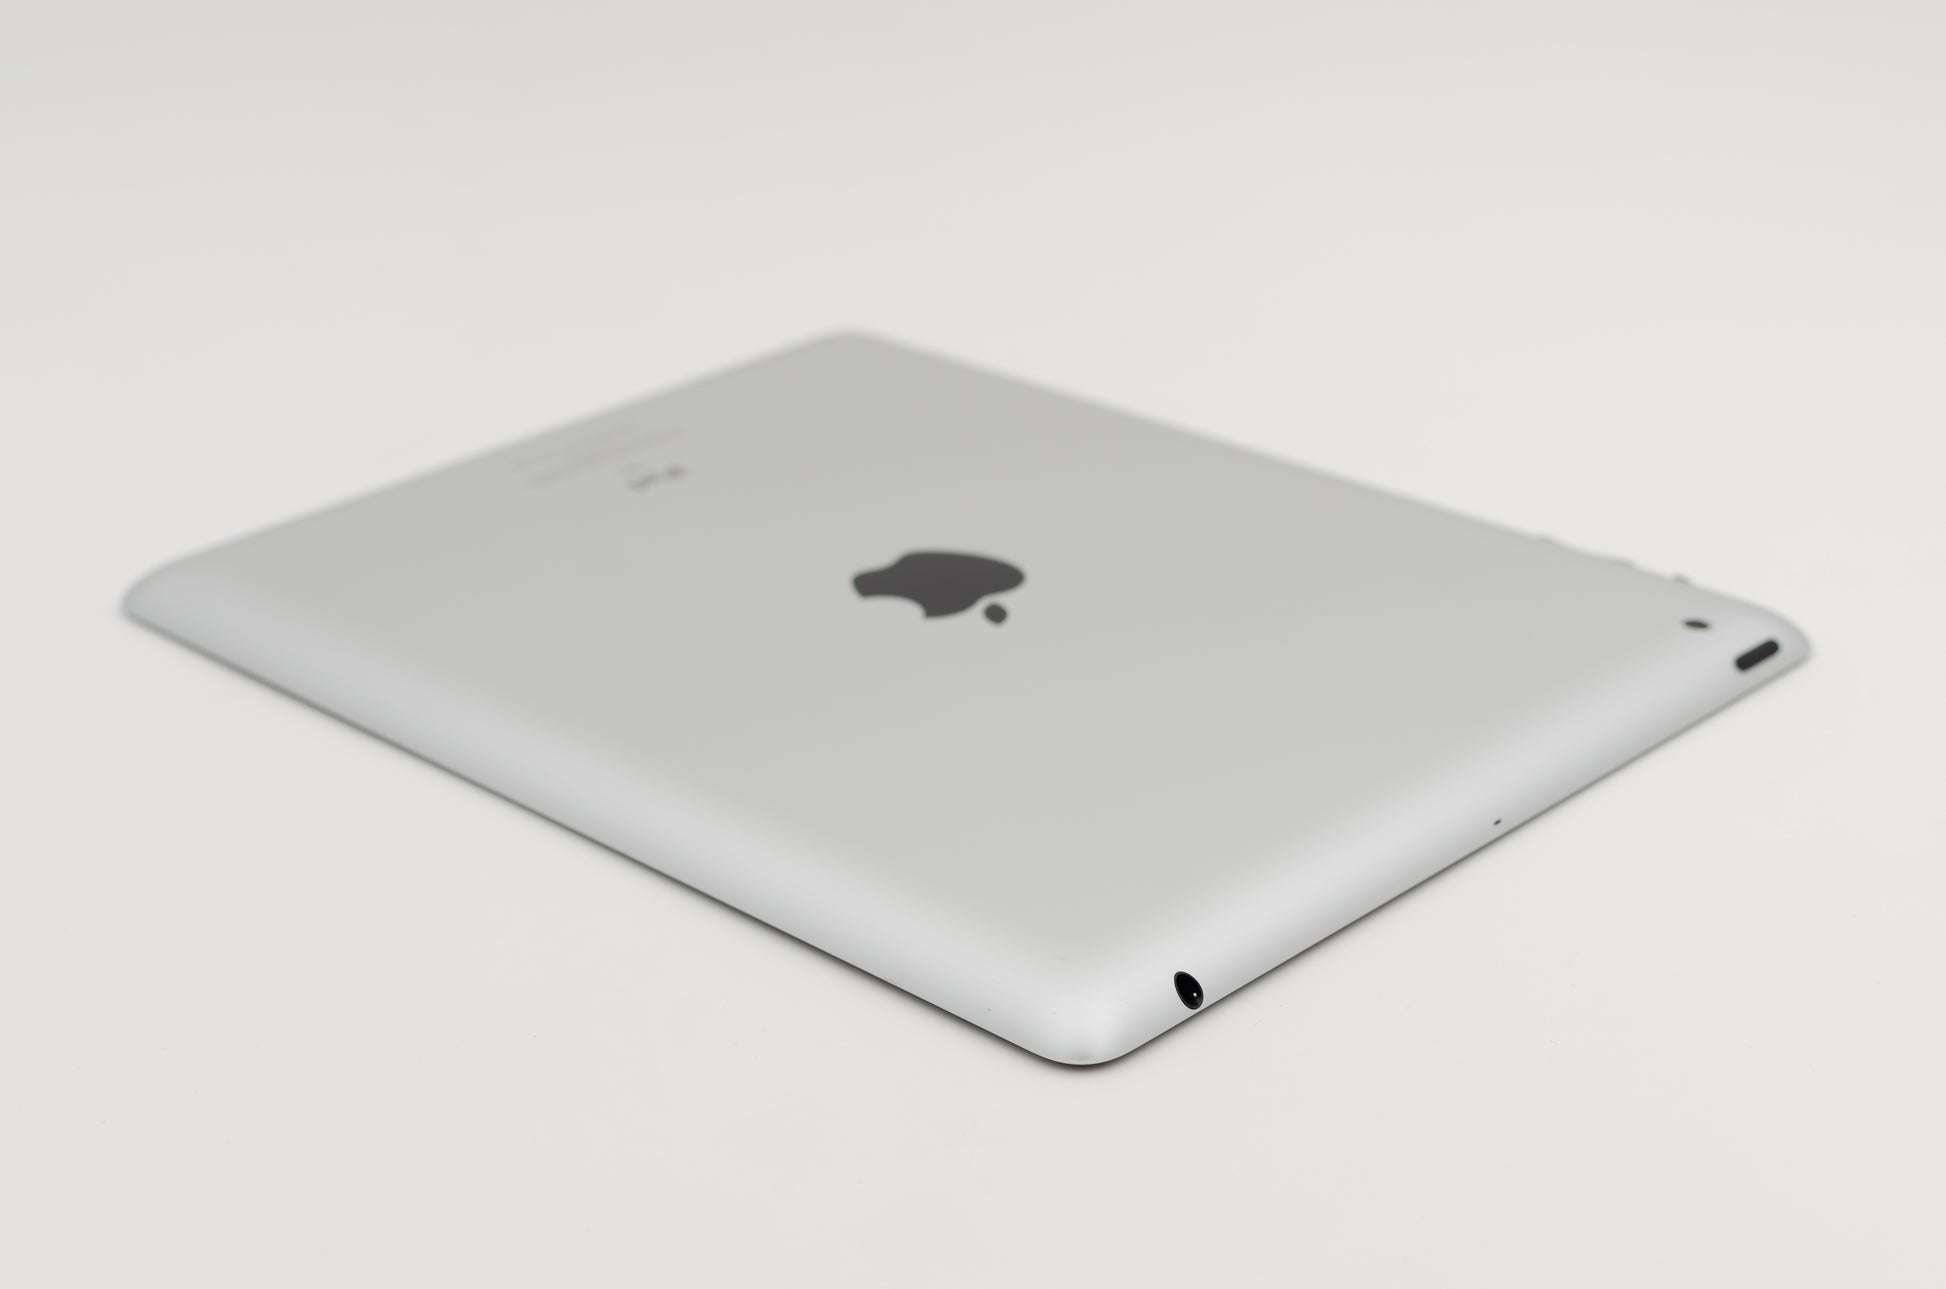 apple-2012-9.7-inch-ipad-2-a1395-silver/white-3